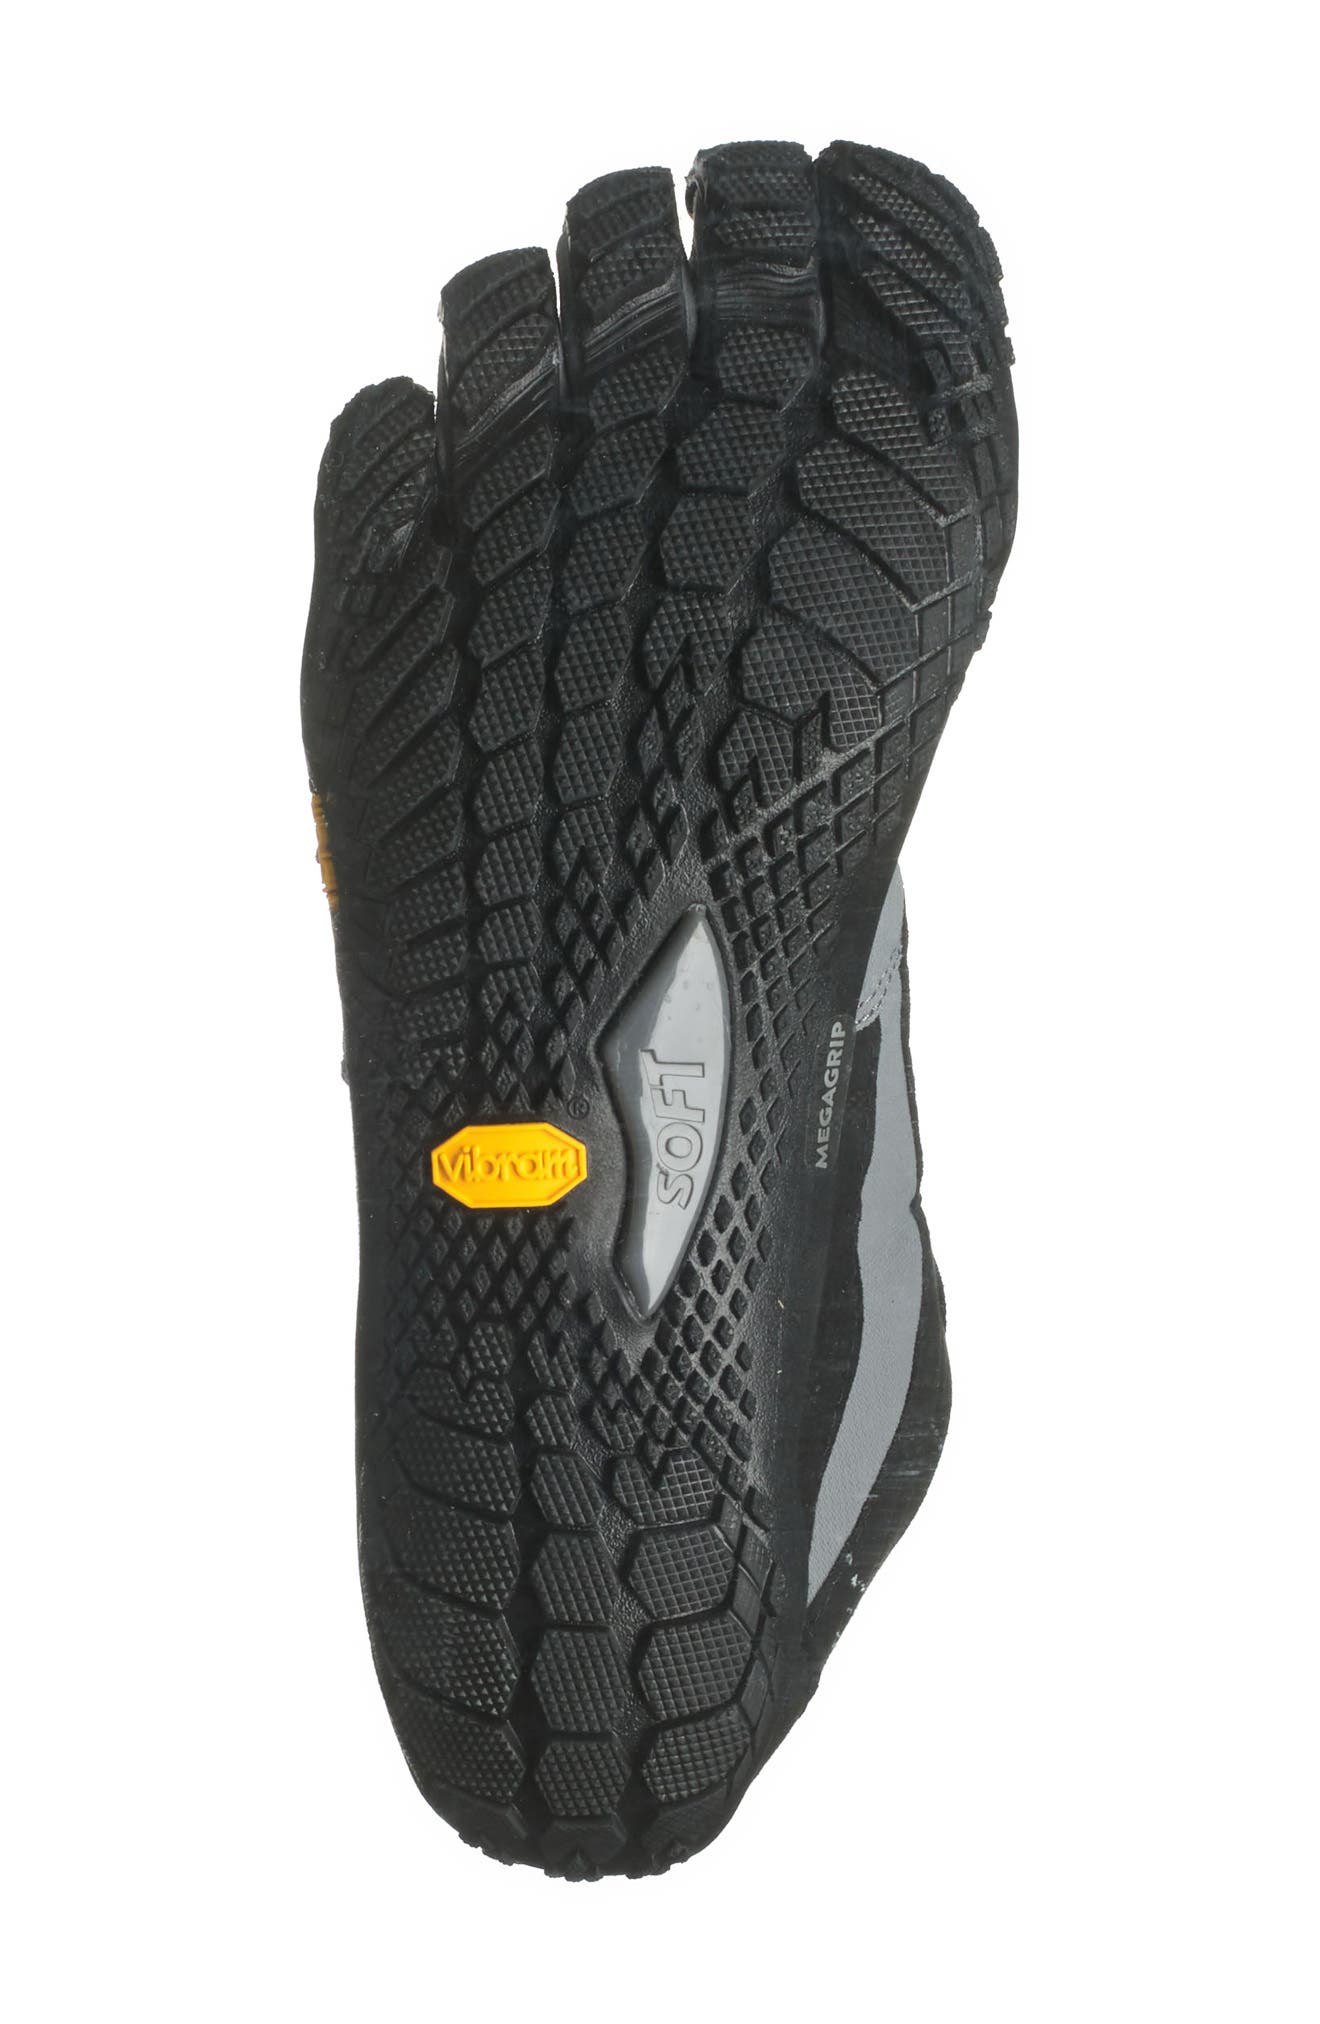 Vibram Fivefingers Hiking Shoe In Black/grey/citronelle